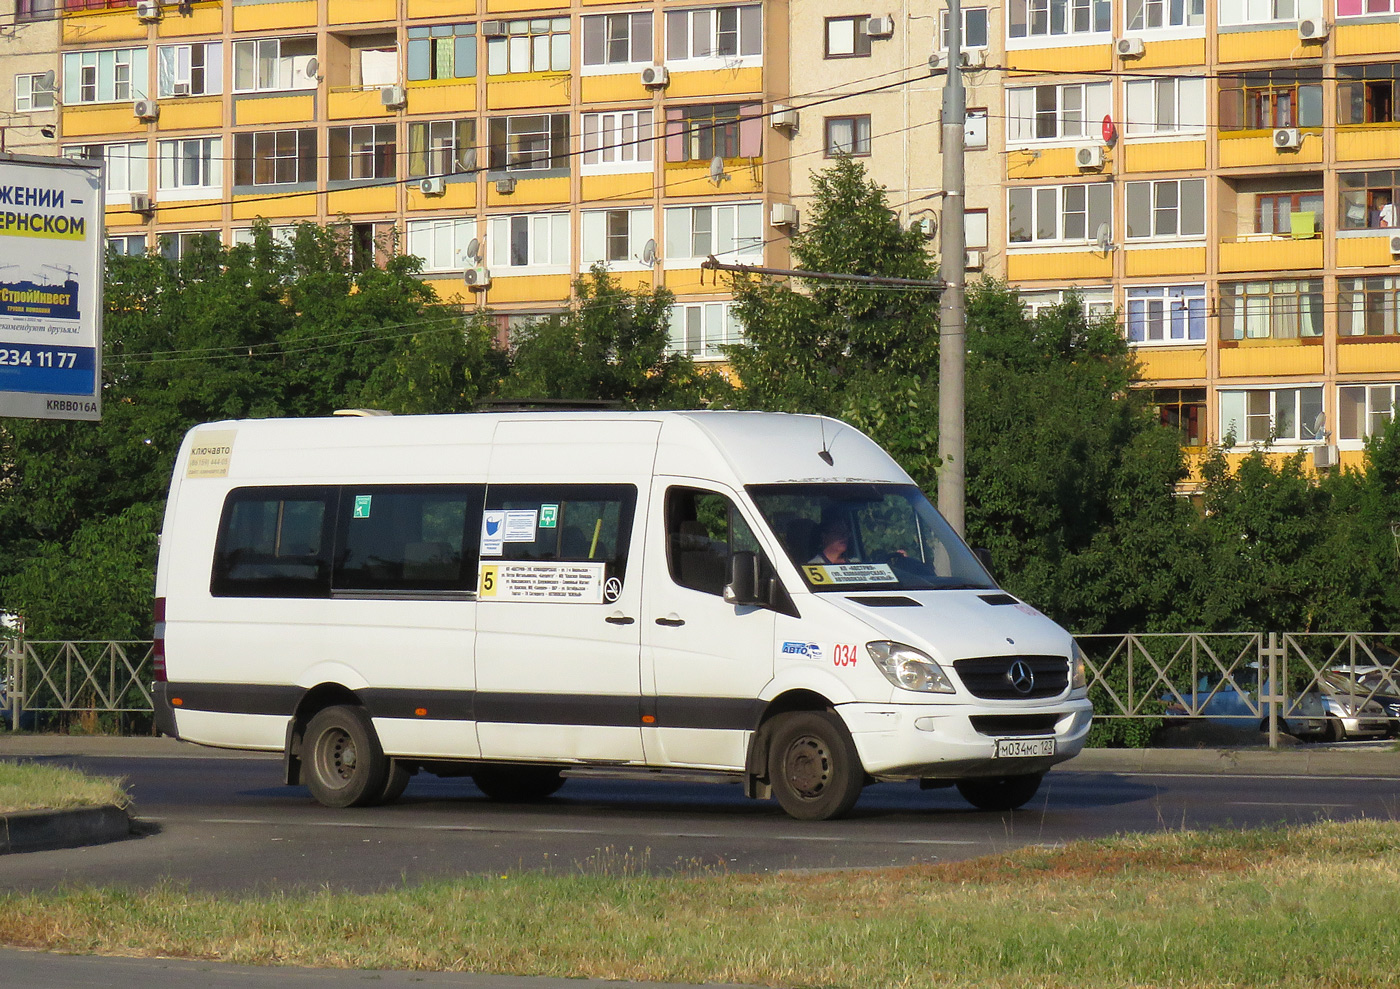 Krasnodar region, Luidor-22360C (MB Sprinter) Nr. М 034 МС 123